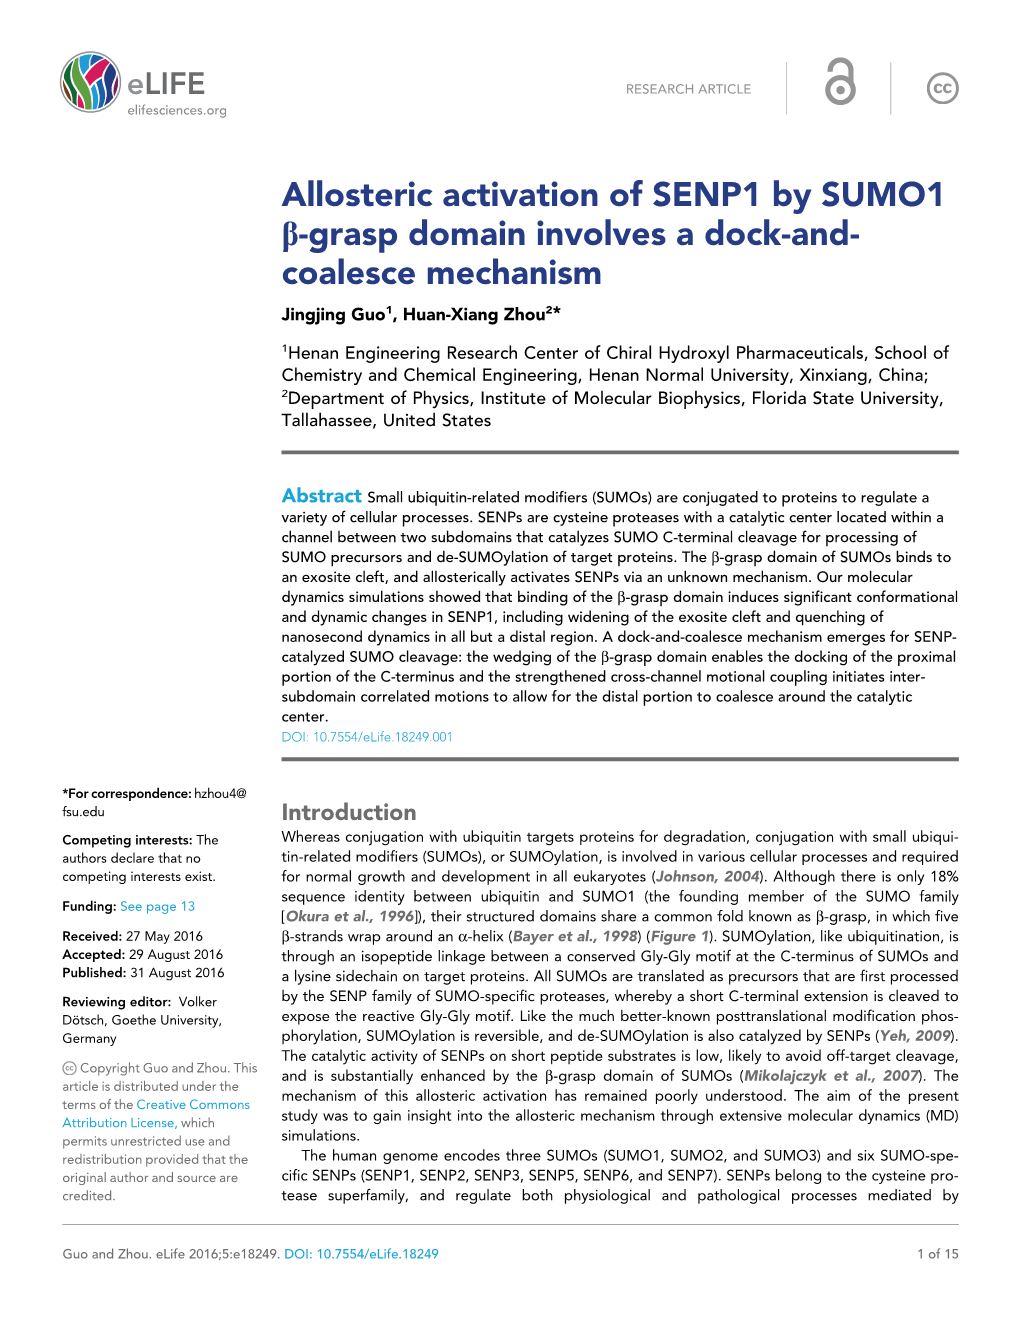 Allosteric Activation of SENP1 by SUMO1 B-Grasp Domain Involves a Dock-And- Coalesce Mechanism Jingjing Guo1, Huan-Xiang Zhou2*